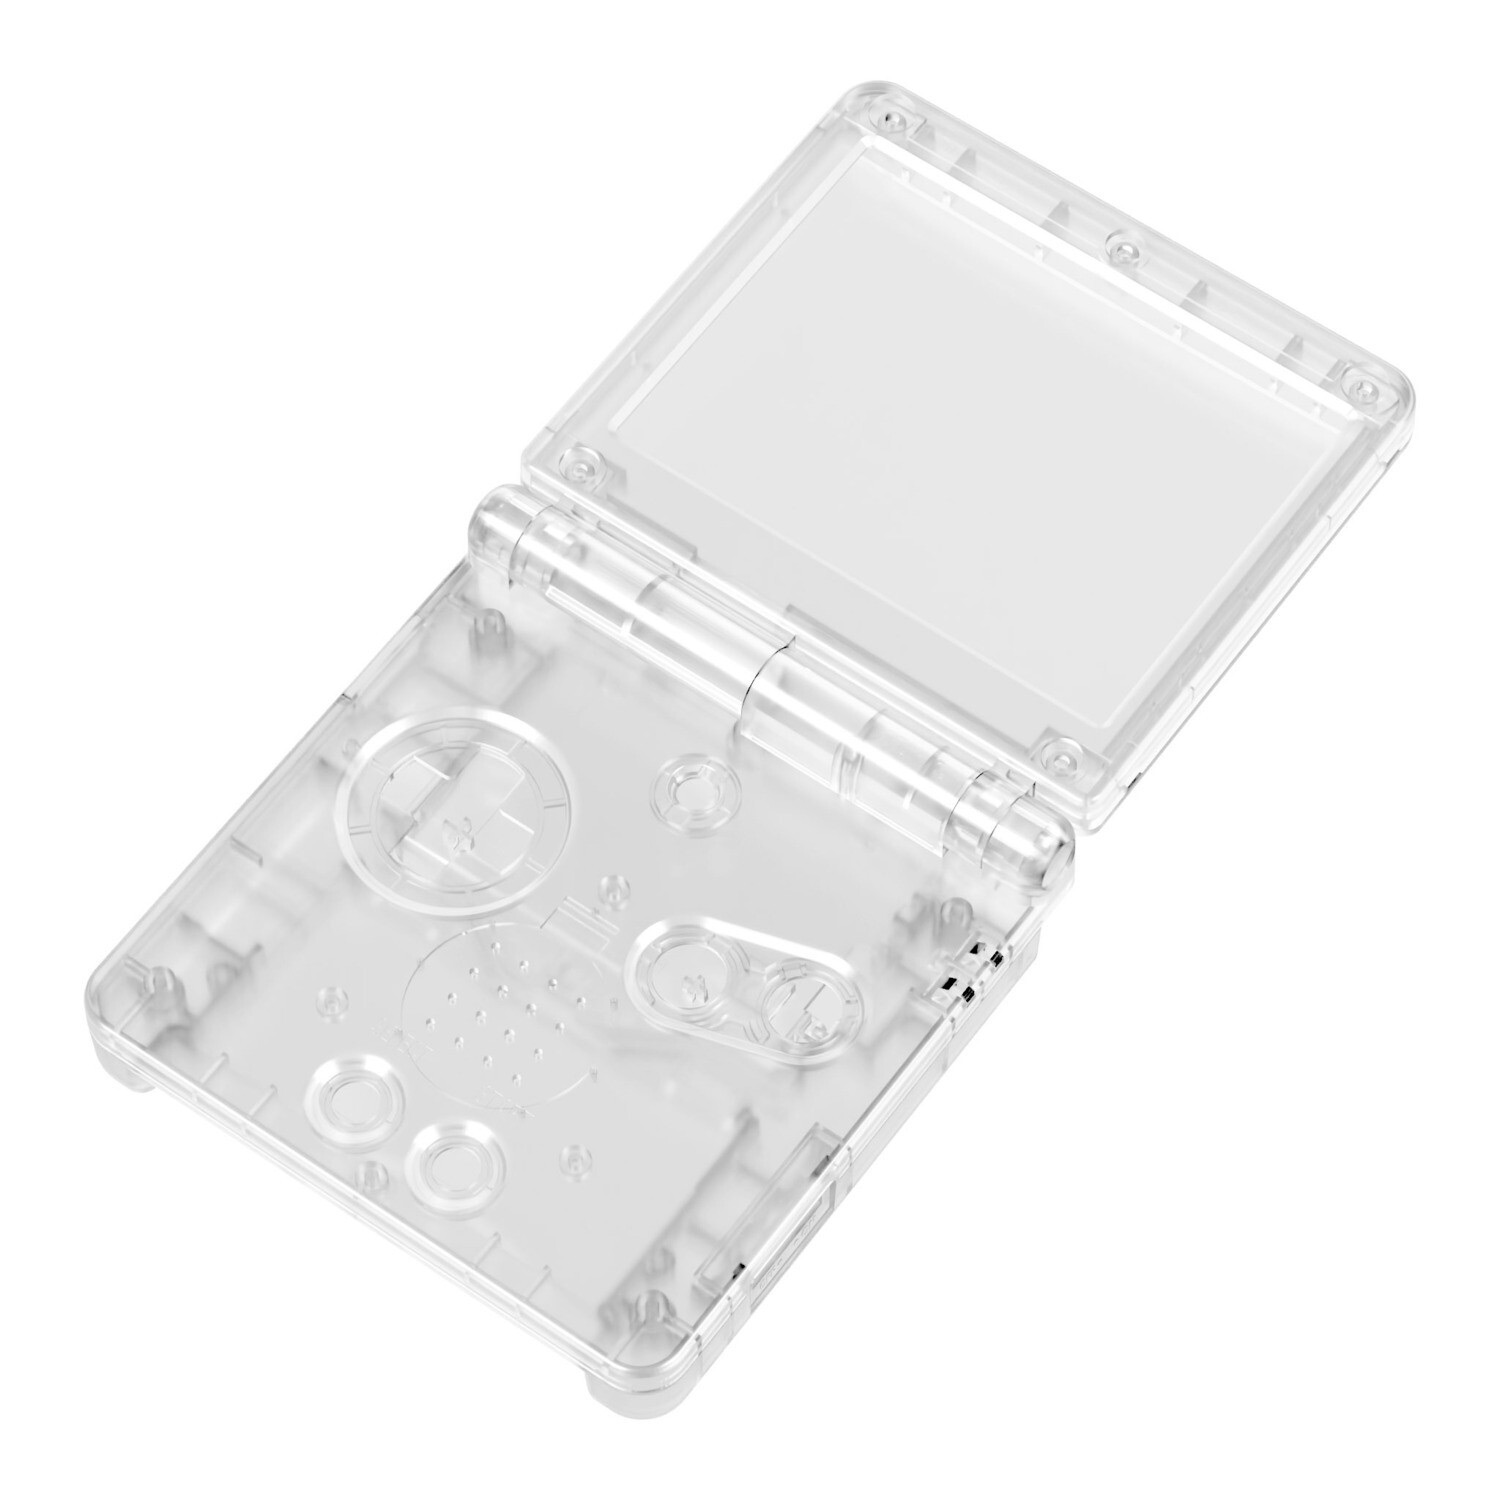 Game Boy Advance SP Gehäuse (Clear)